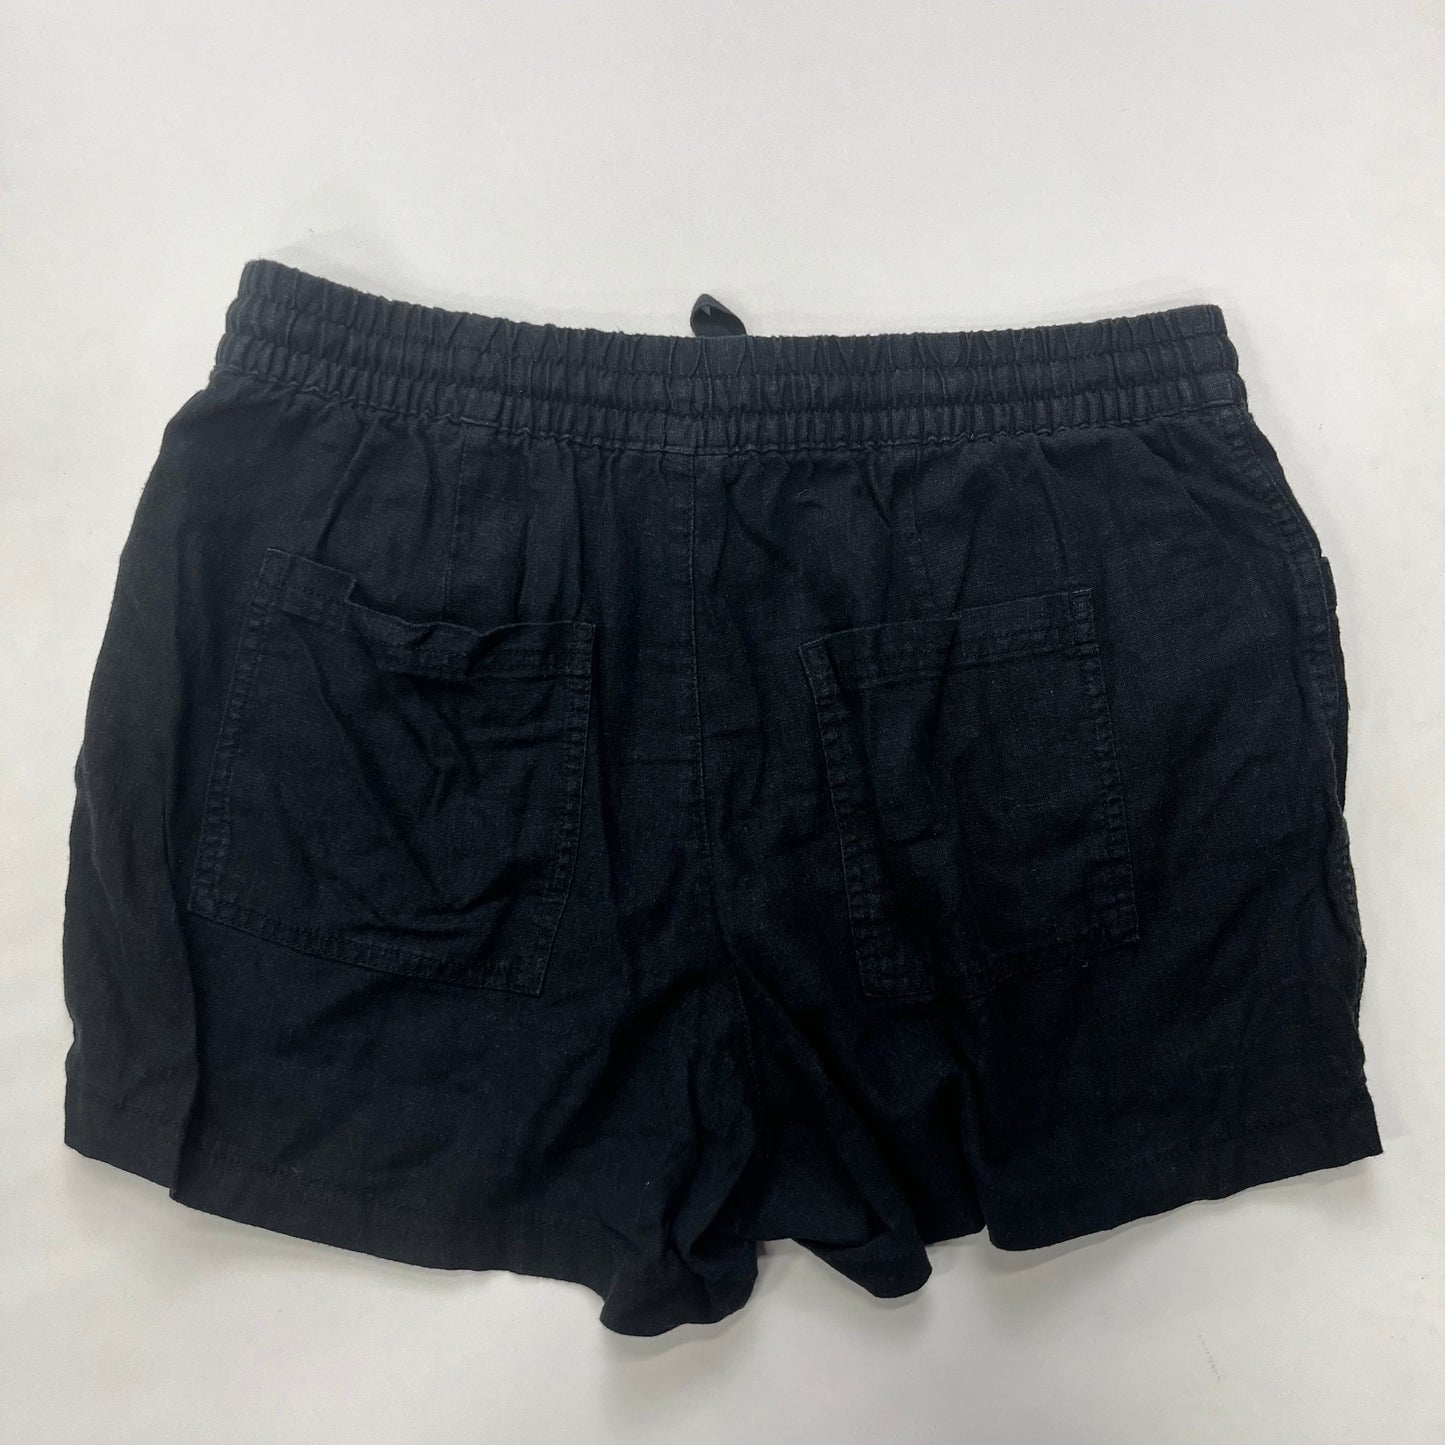 Black Shorts Gap, Size 12